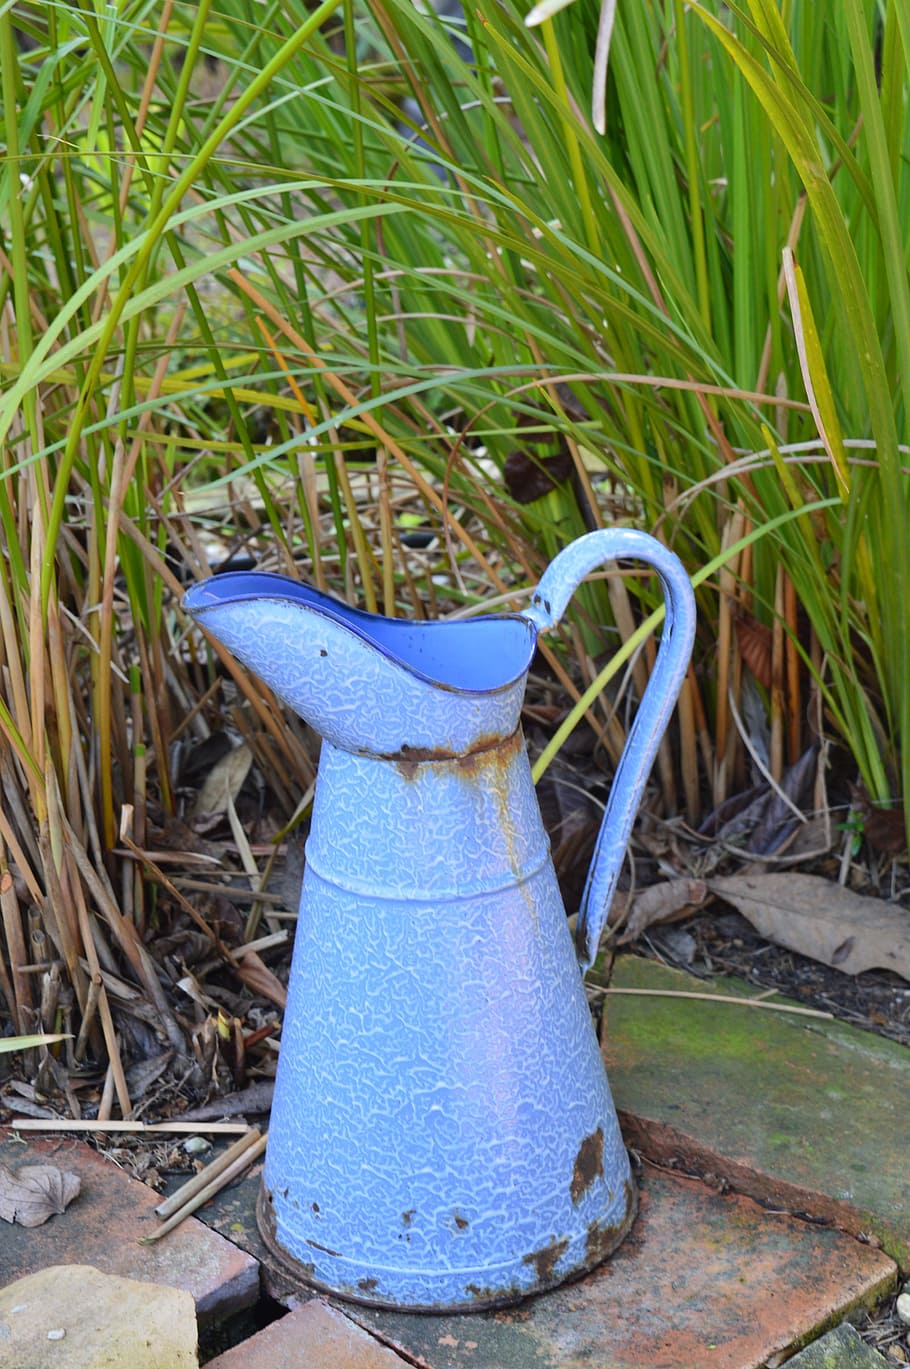 Nature, Pot, Watering Can, Flower, Pots, flower pots, garden, blue, outdoors, cultures